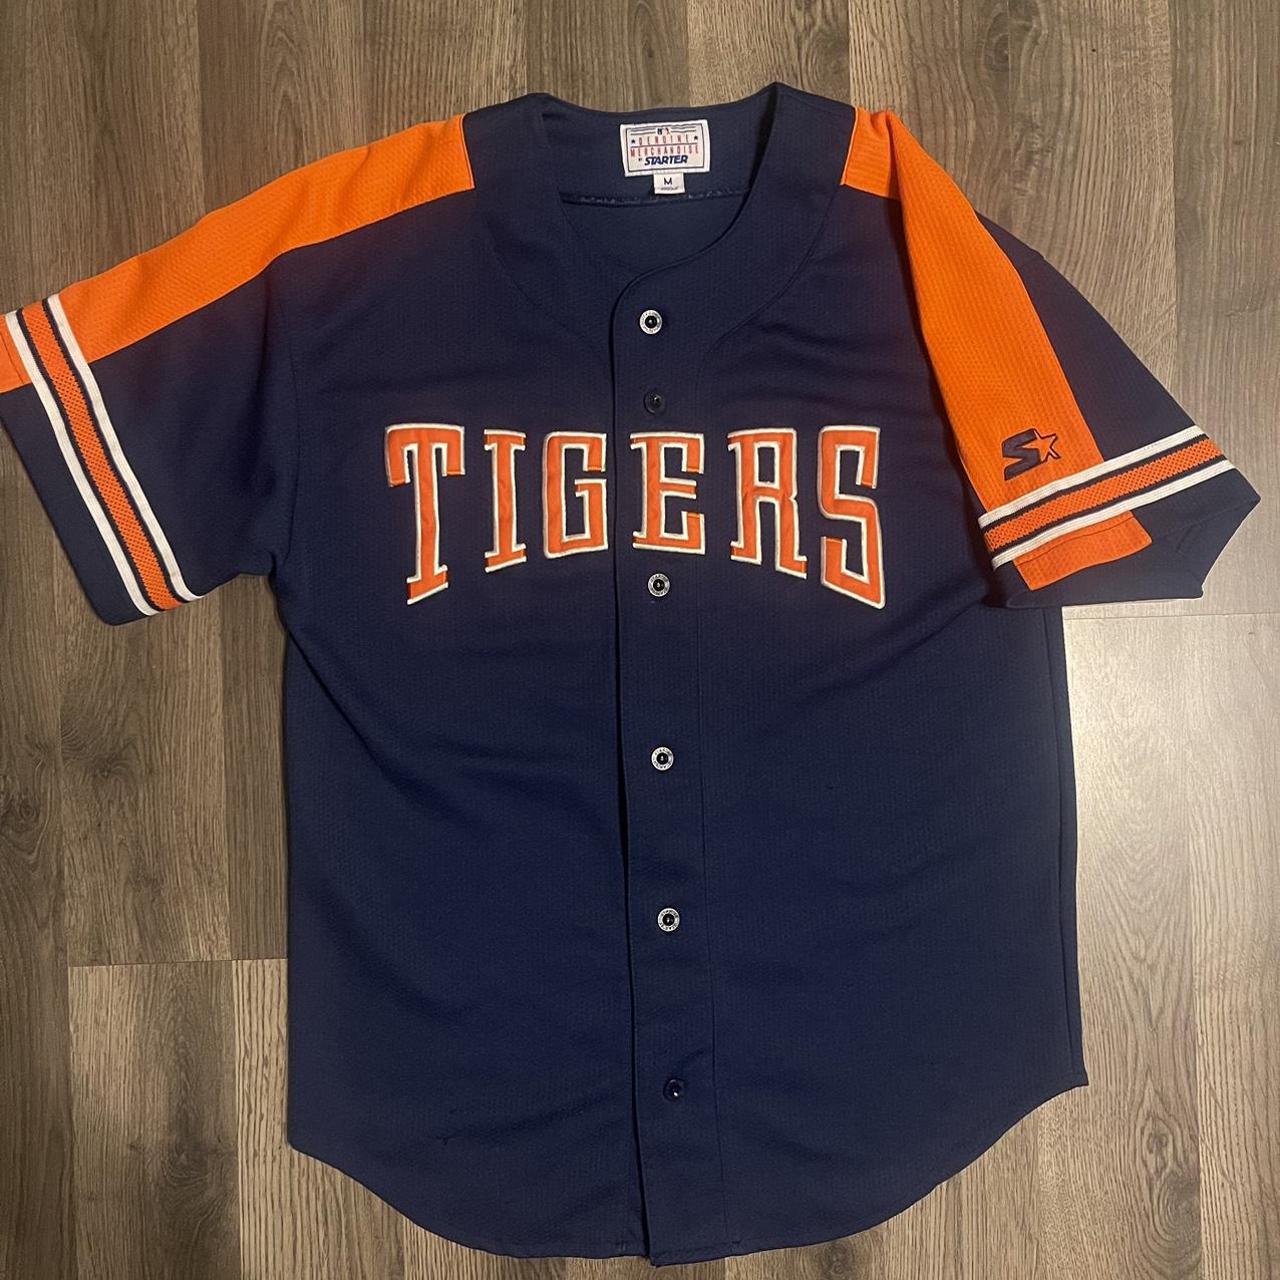 detroit tigers blue jersey